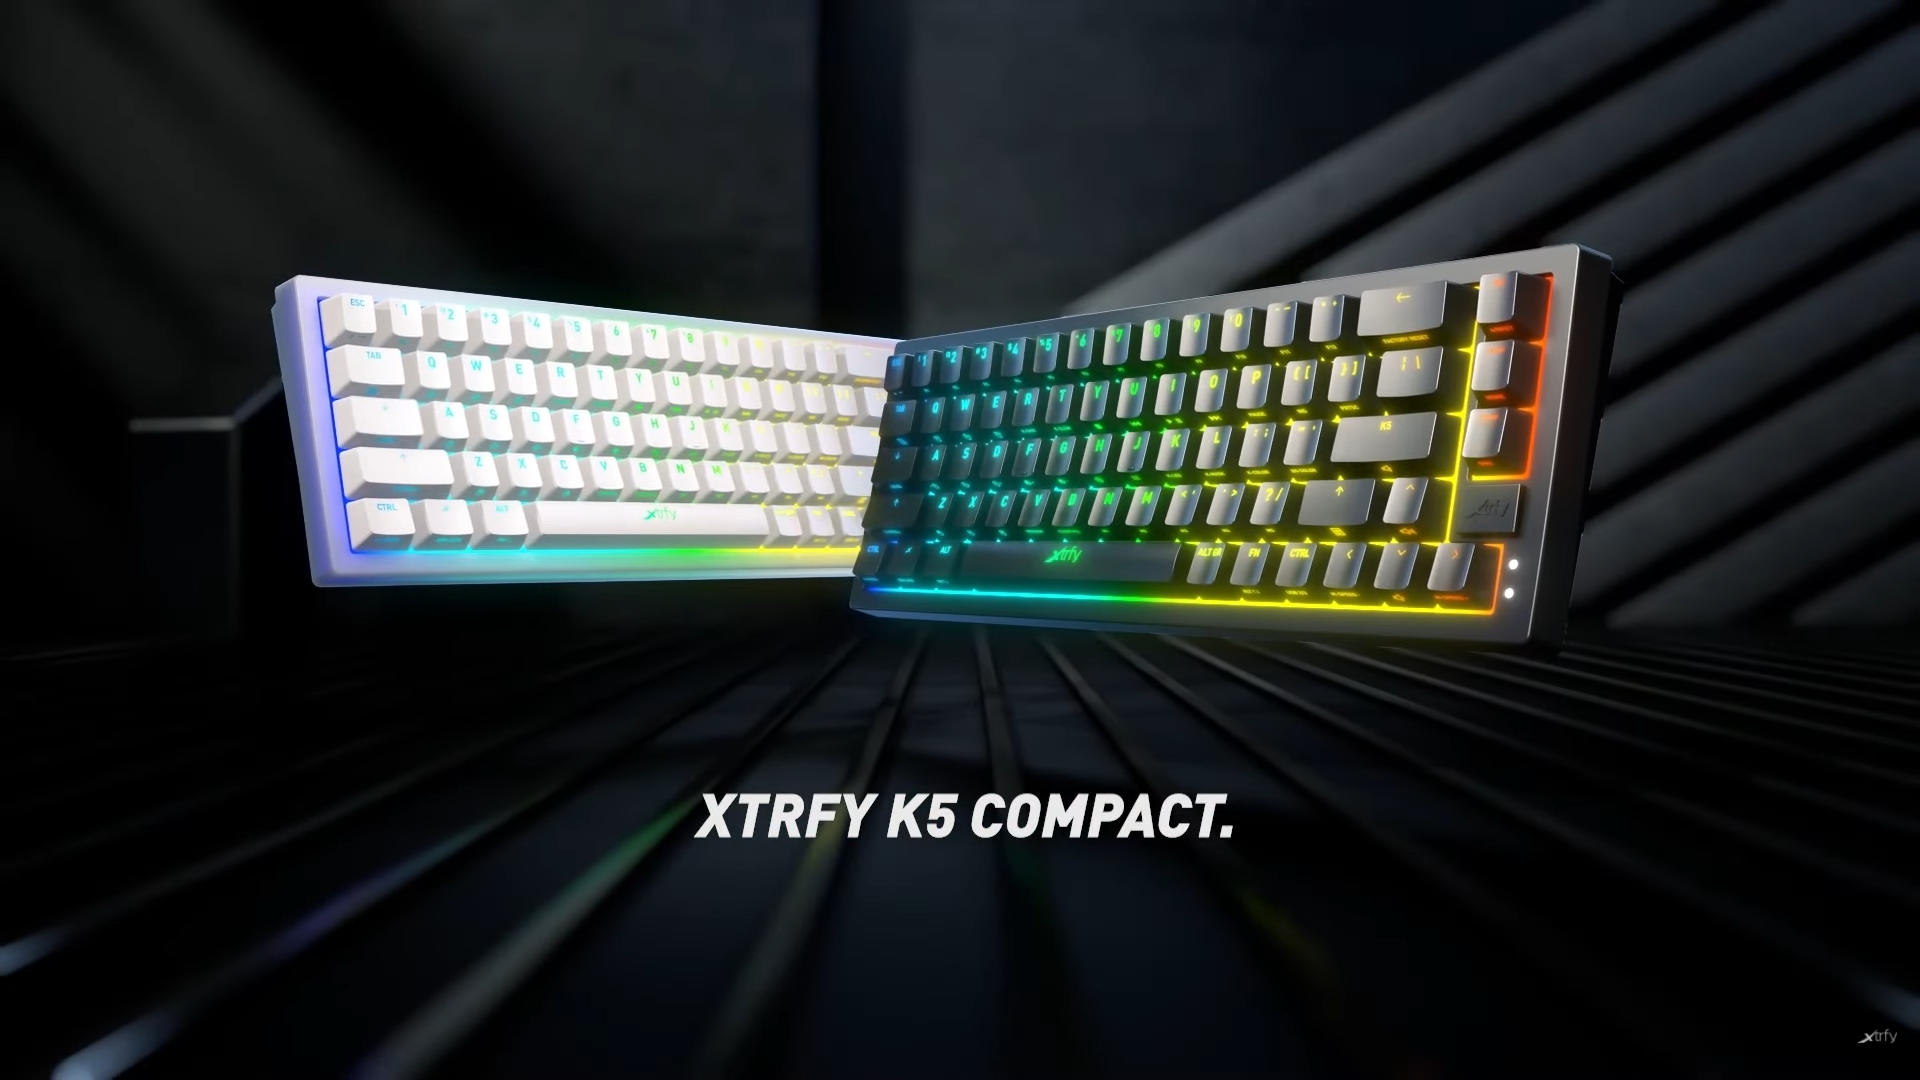 xtrfy k5 compact